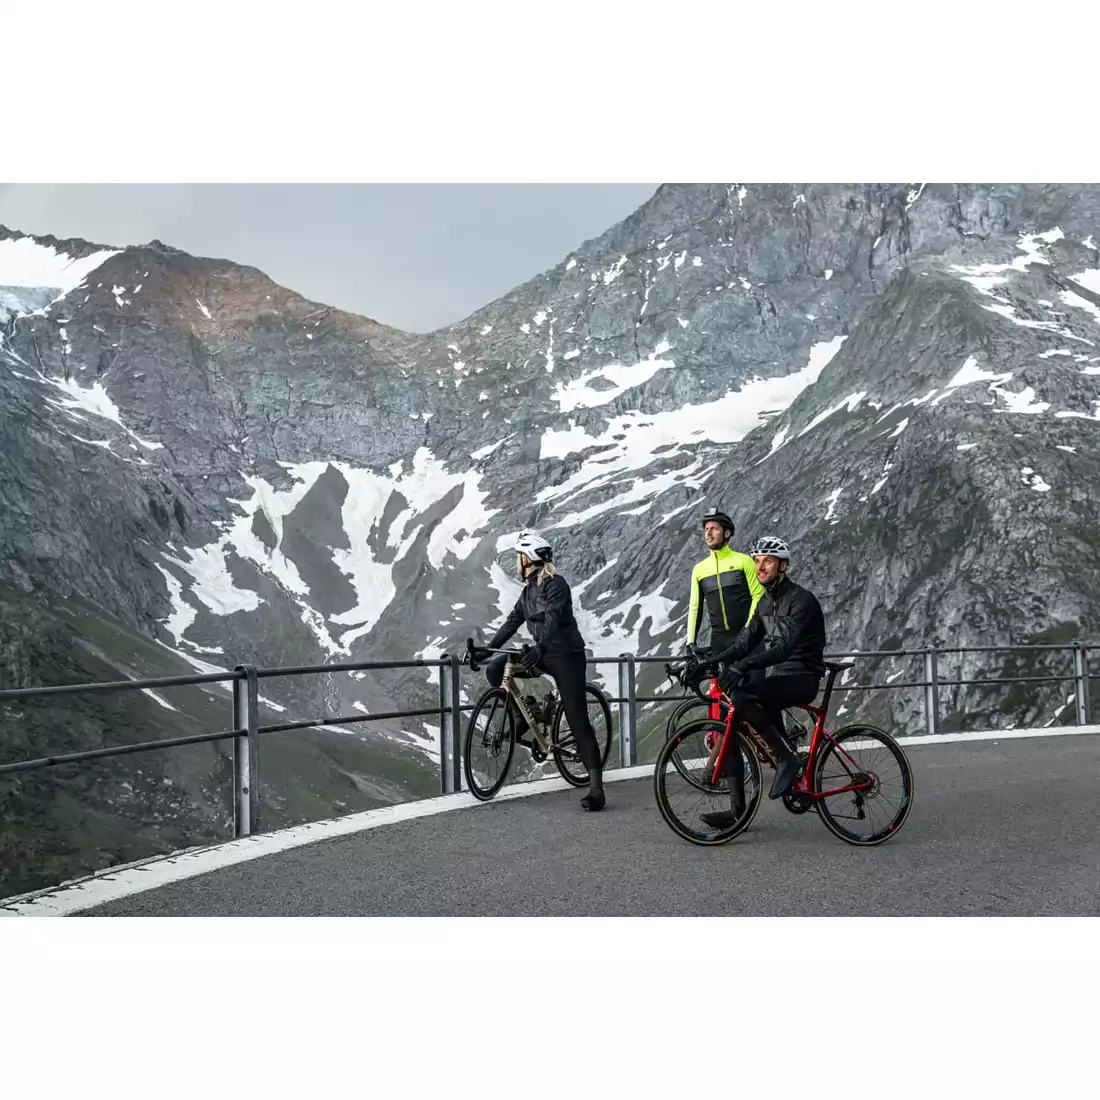 Rogelli ATTQ men's winter cycling jacket, black and gray